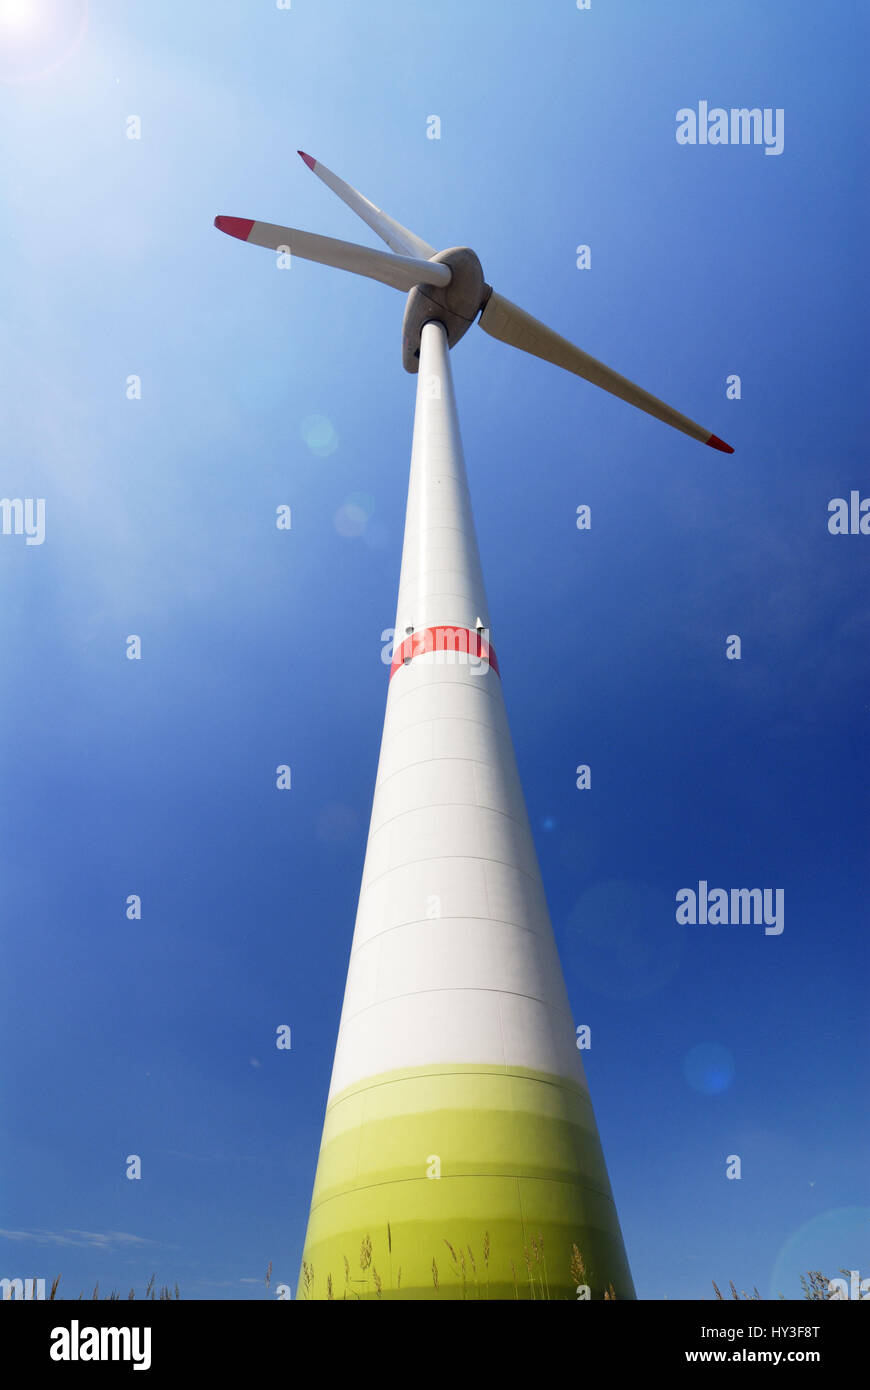 Enercon wind park with the wind turbine E-126 in Altenwerder, Hamburg, Germany, Europe, Enercon Windpark mit dem Windrad E-126 in Altenwerder, Deutsch Stock Photo